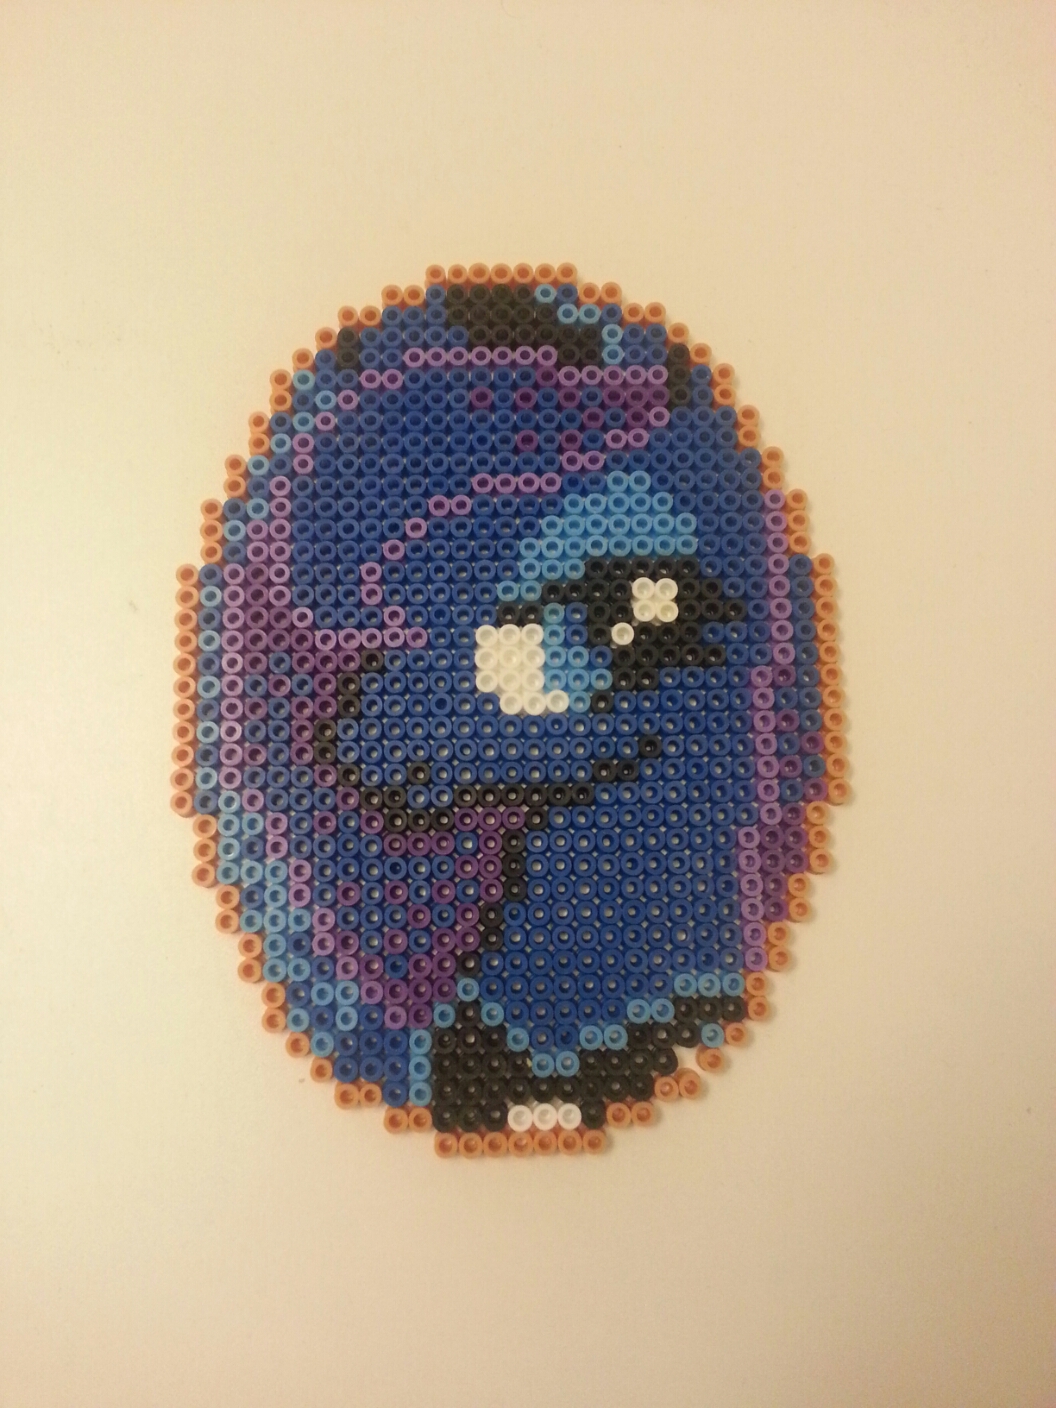 pixel art minecraft my little pony easy